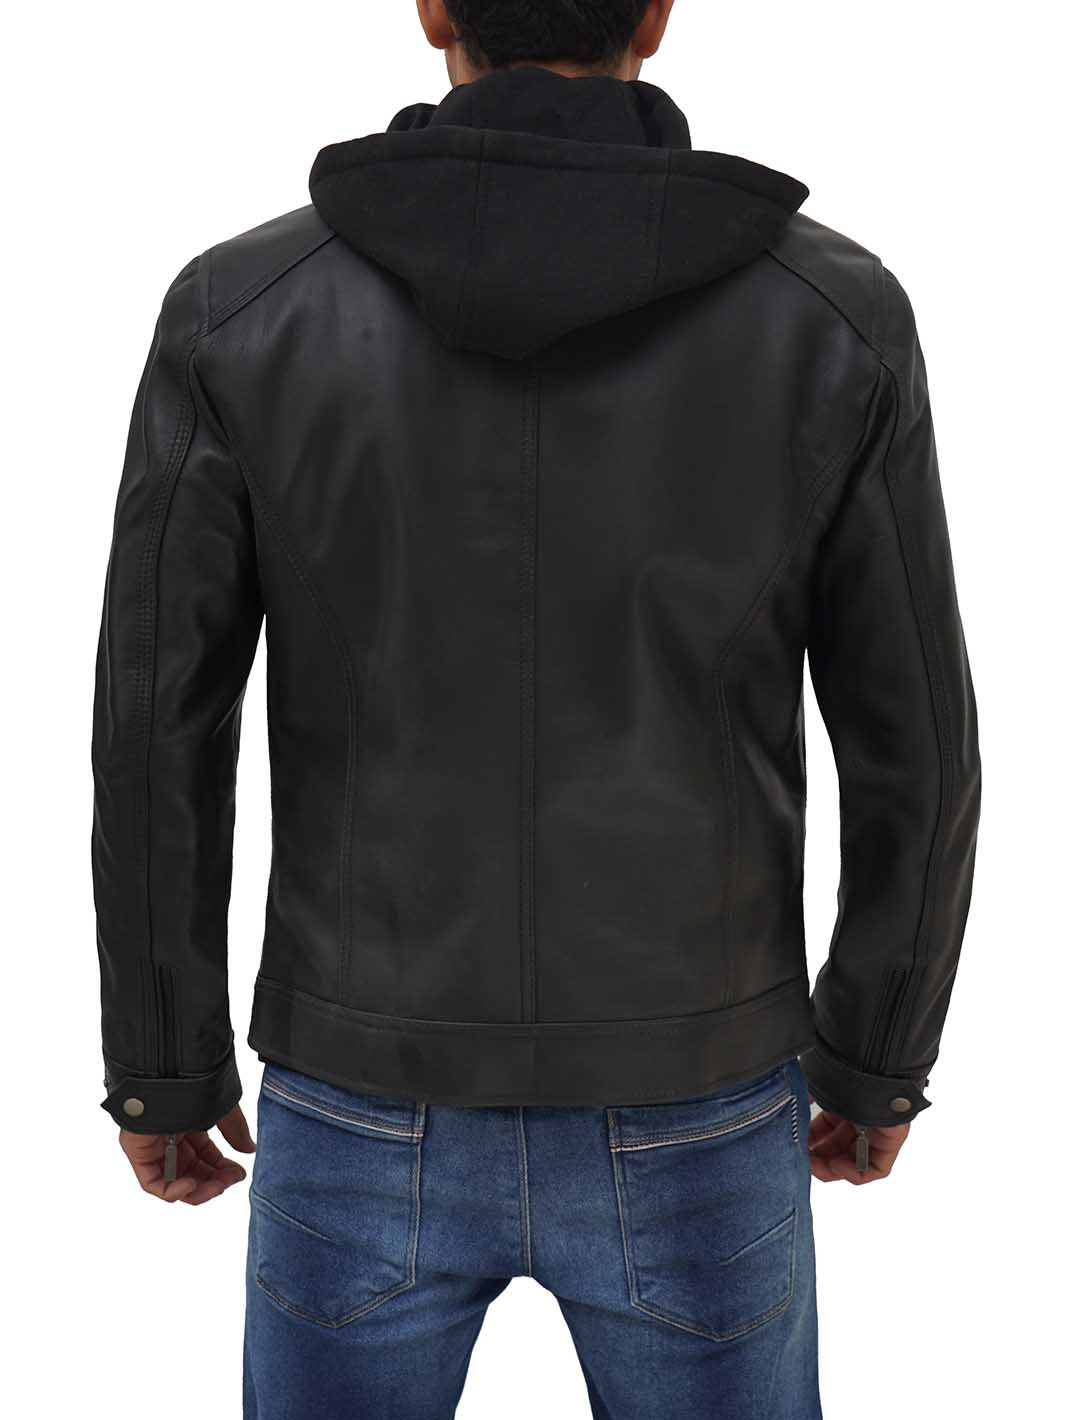 Mens Black Biker Leather Jacket with hood